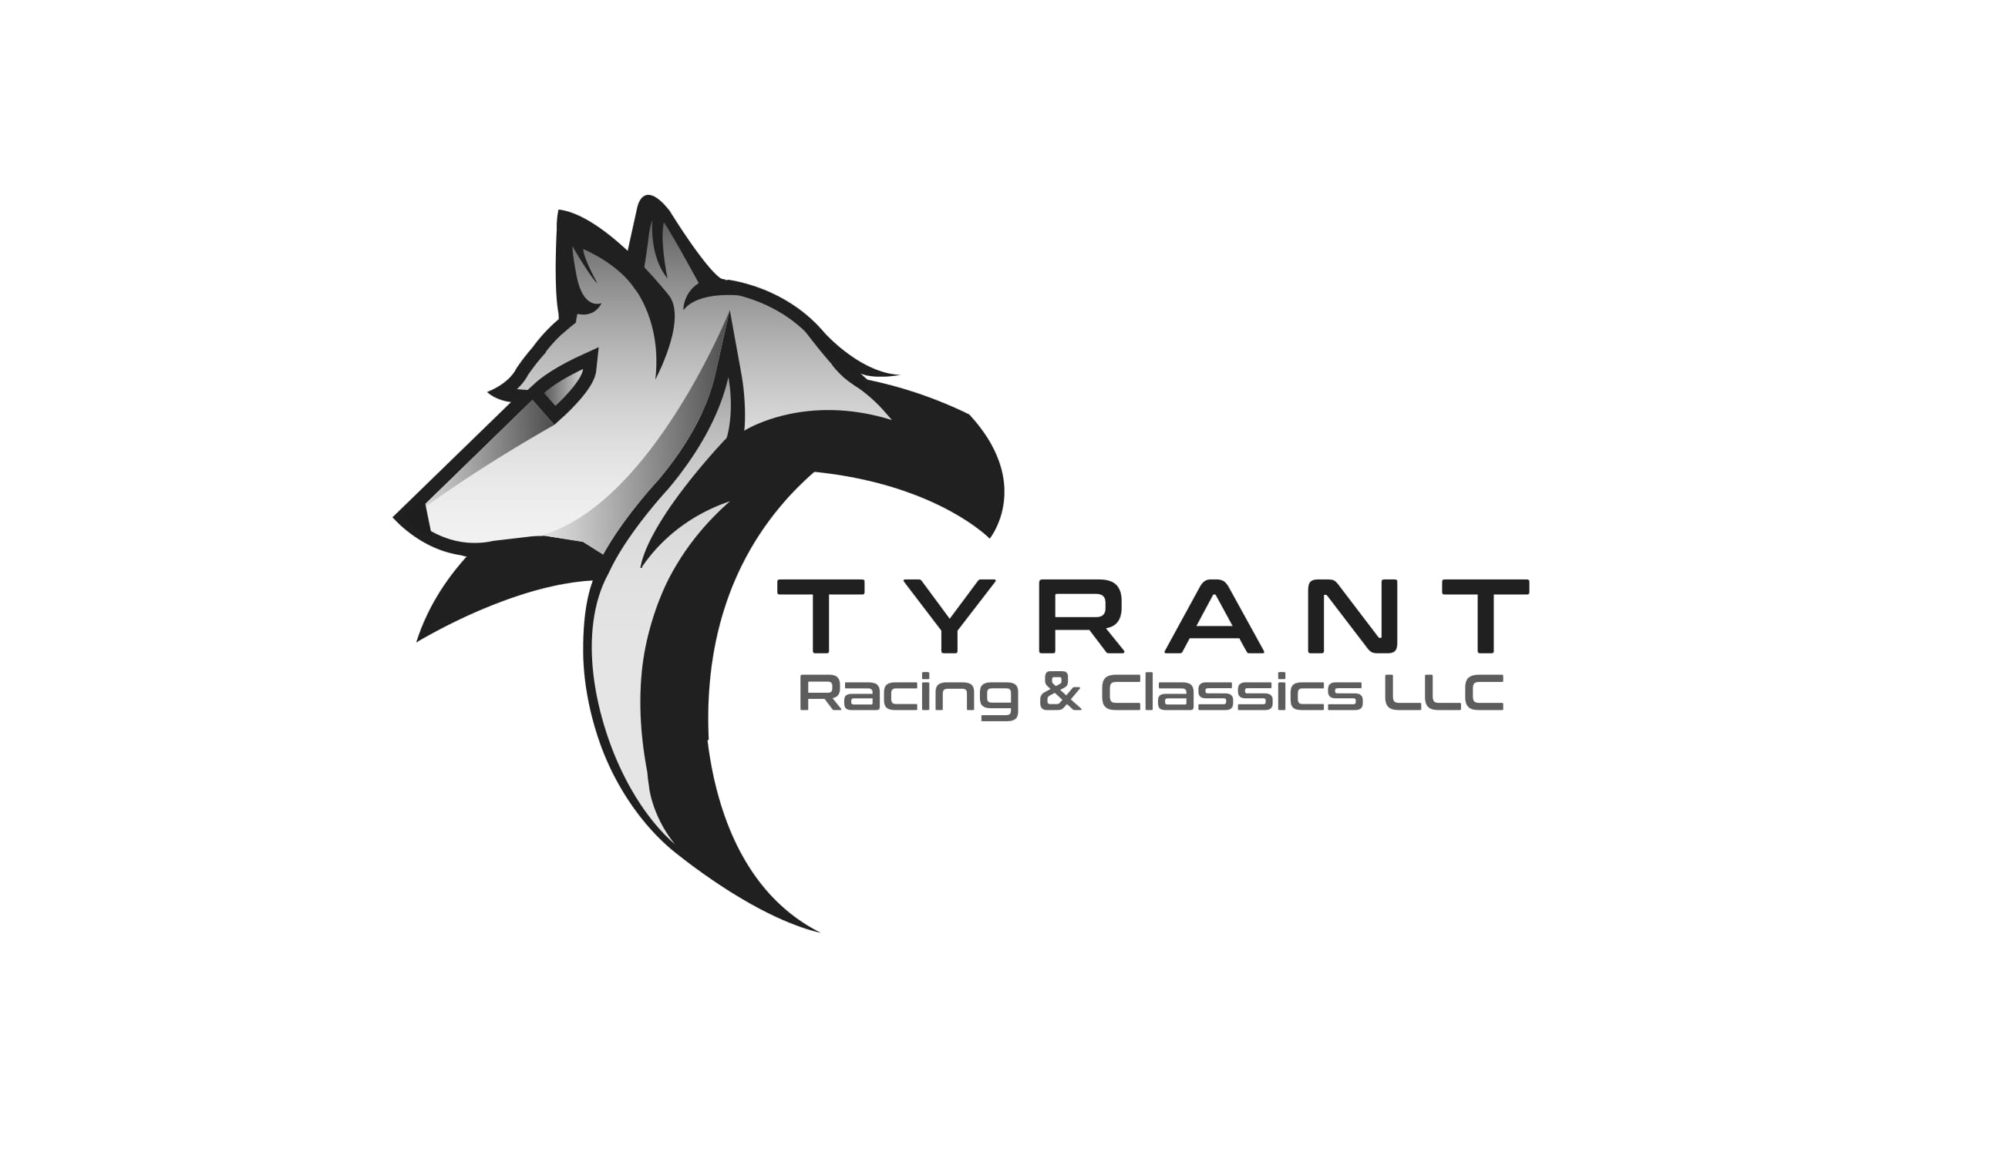 Tyrant Racing & Classics LLC